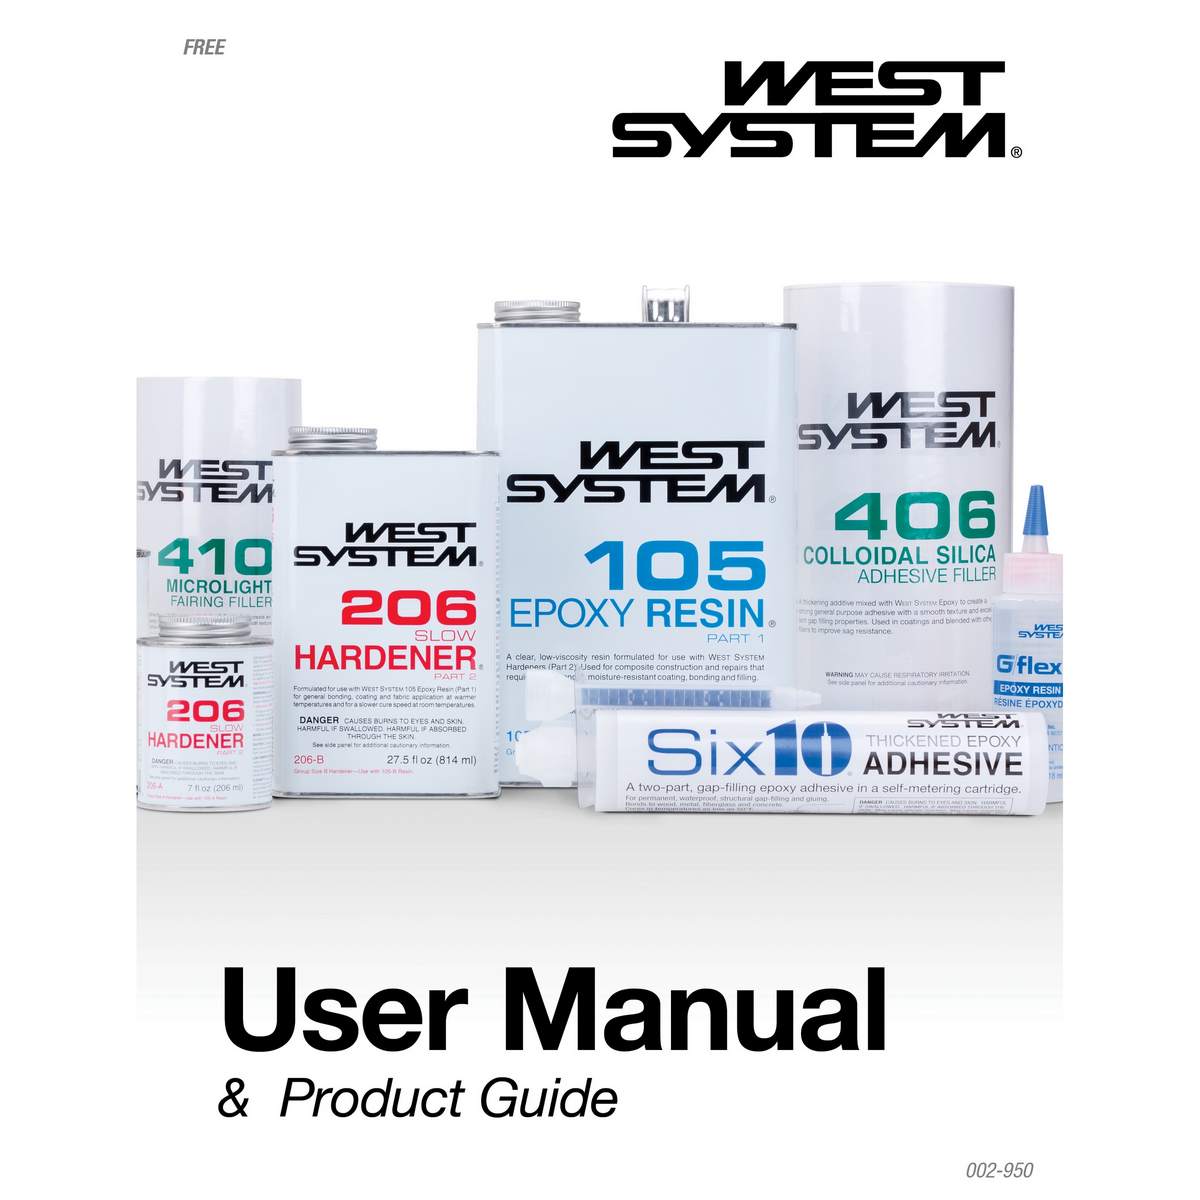 url:https://cdn.shopify.com/s/files/1/0361/6889/files/1116-User-Manual-2016_1.pdf?v=1602463321|alt:West System Manual